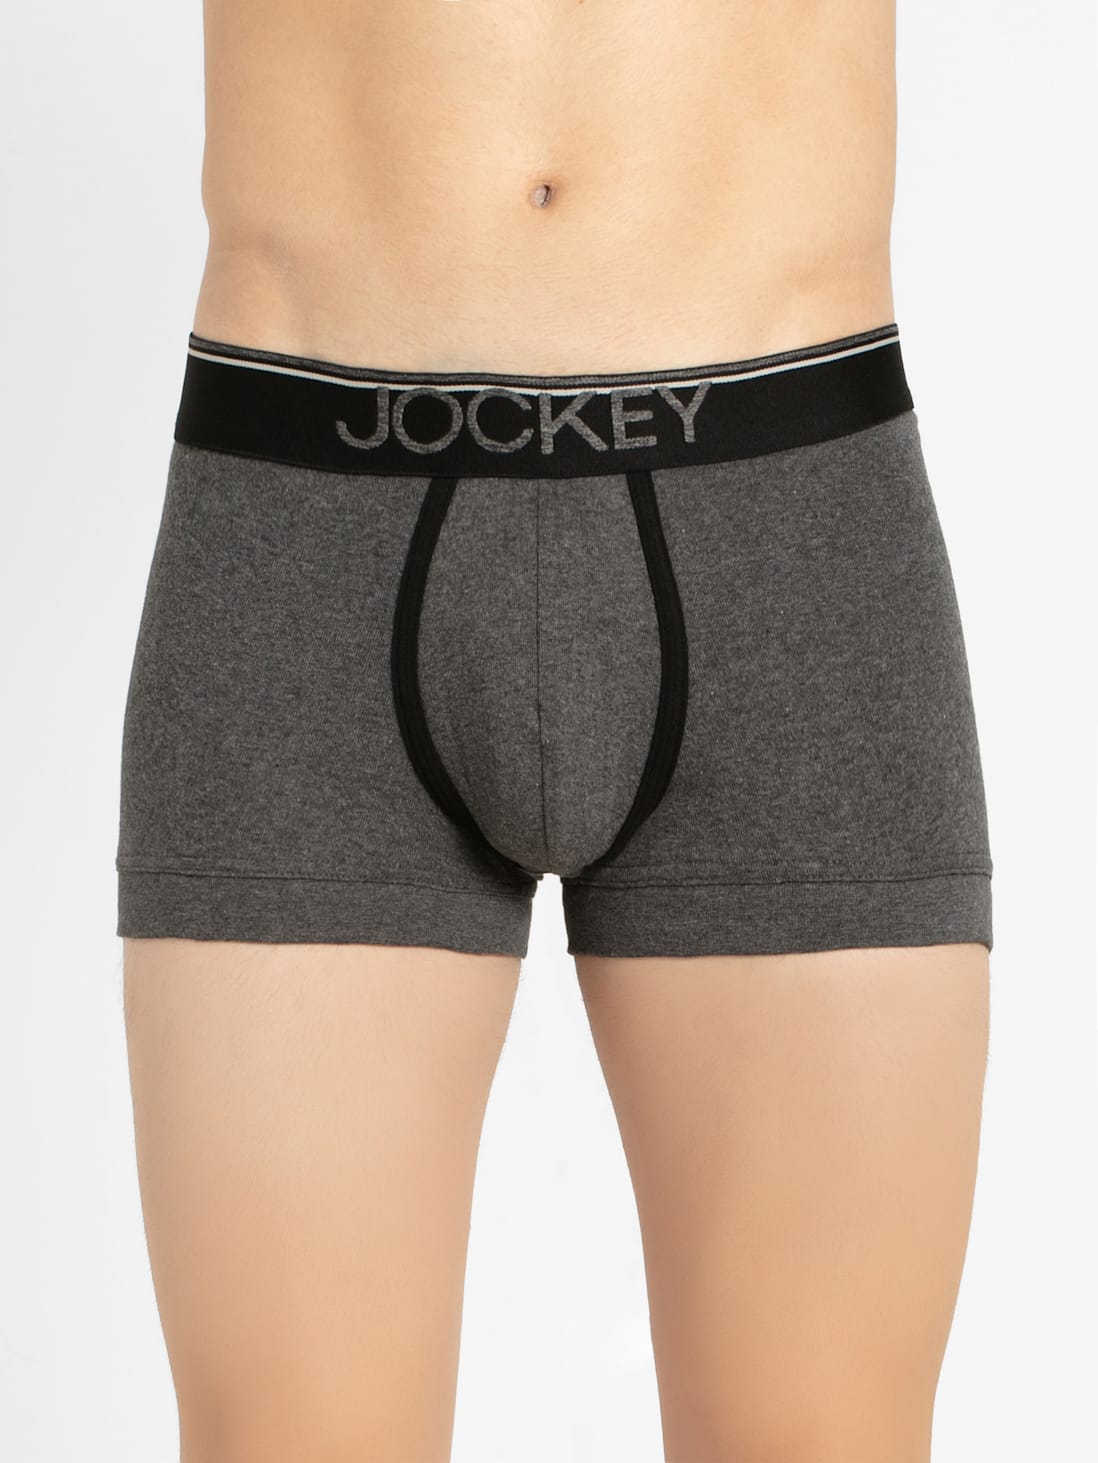 Jockey No Ride Up Micro Trunk, Charcoal - Underwear